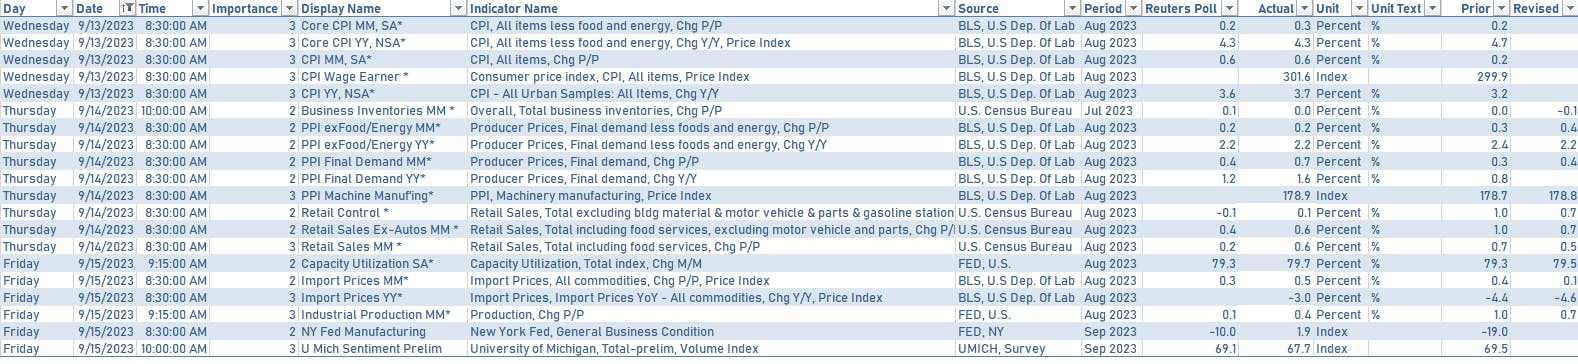 US Economic data last week | Sources: phipost.com, Refinitiv data